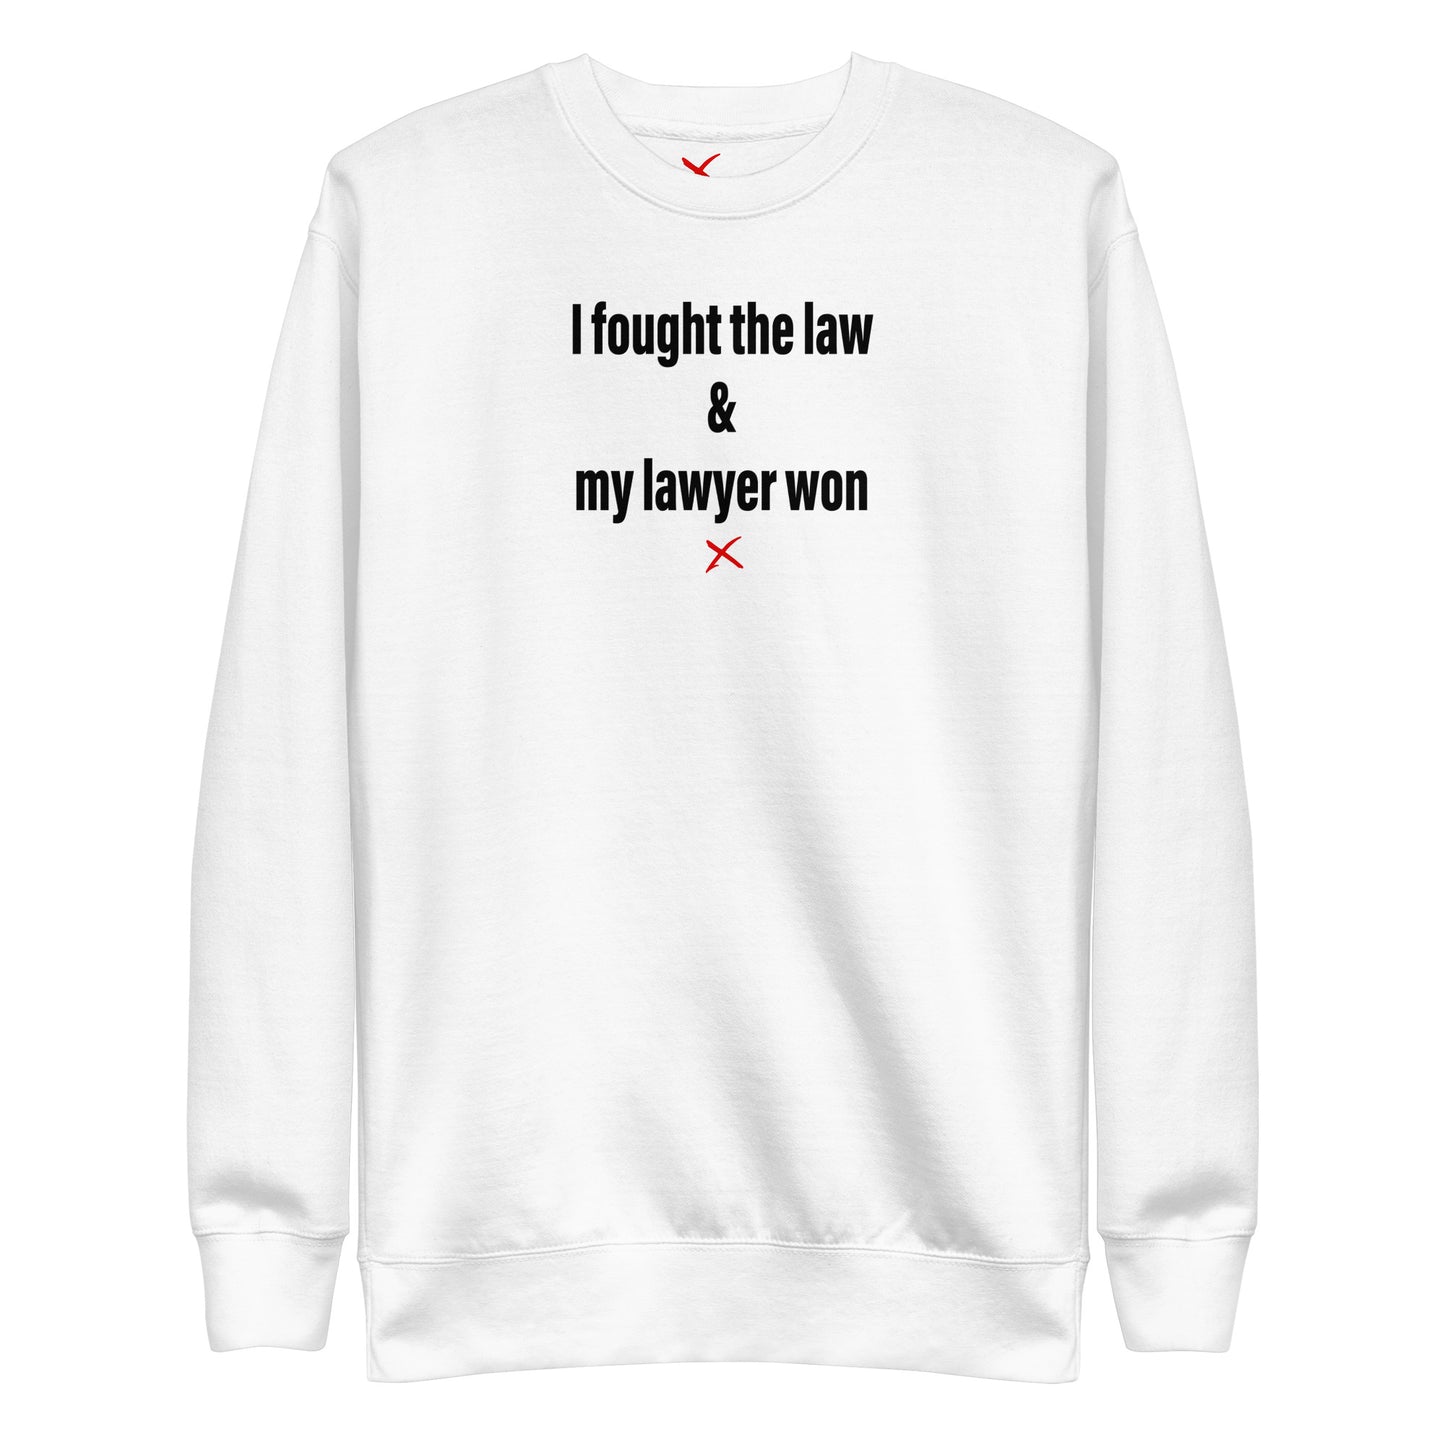 I fought the law & my lawyer won - Sweatshirt